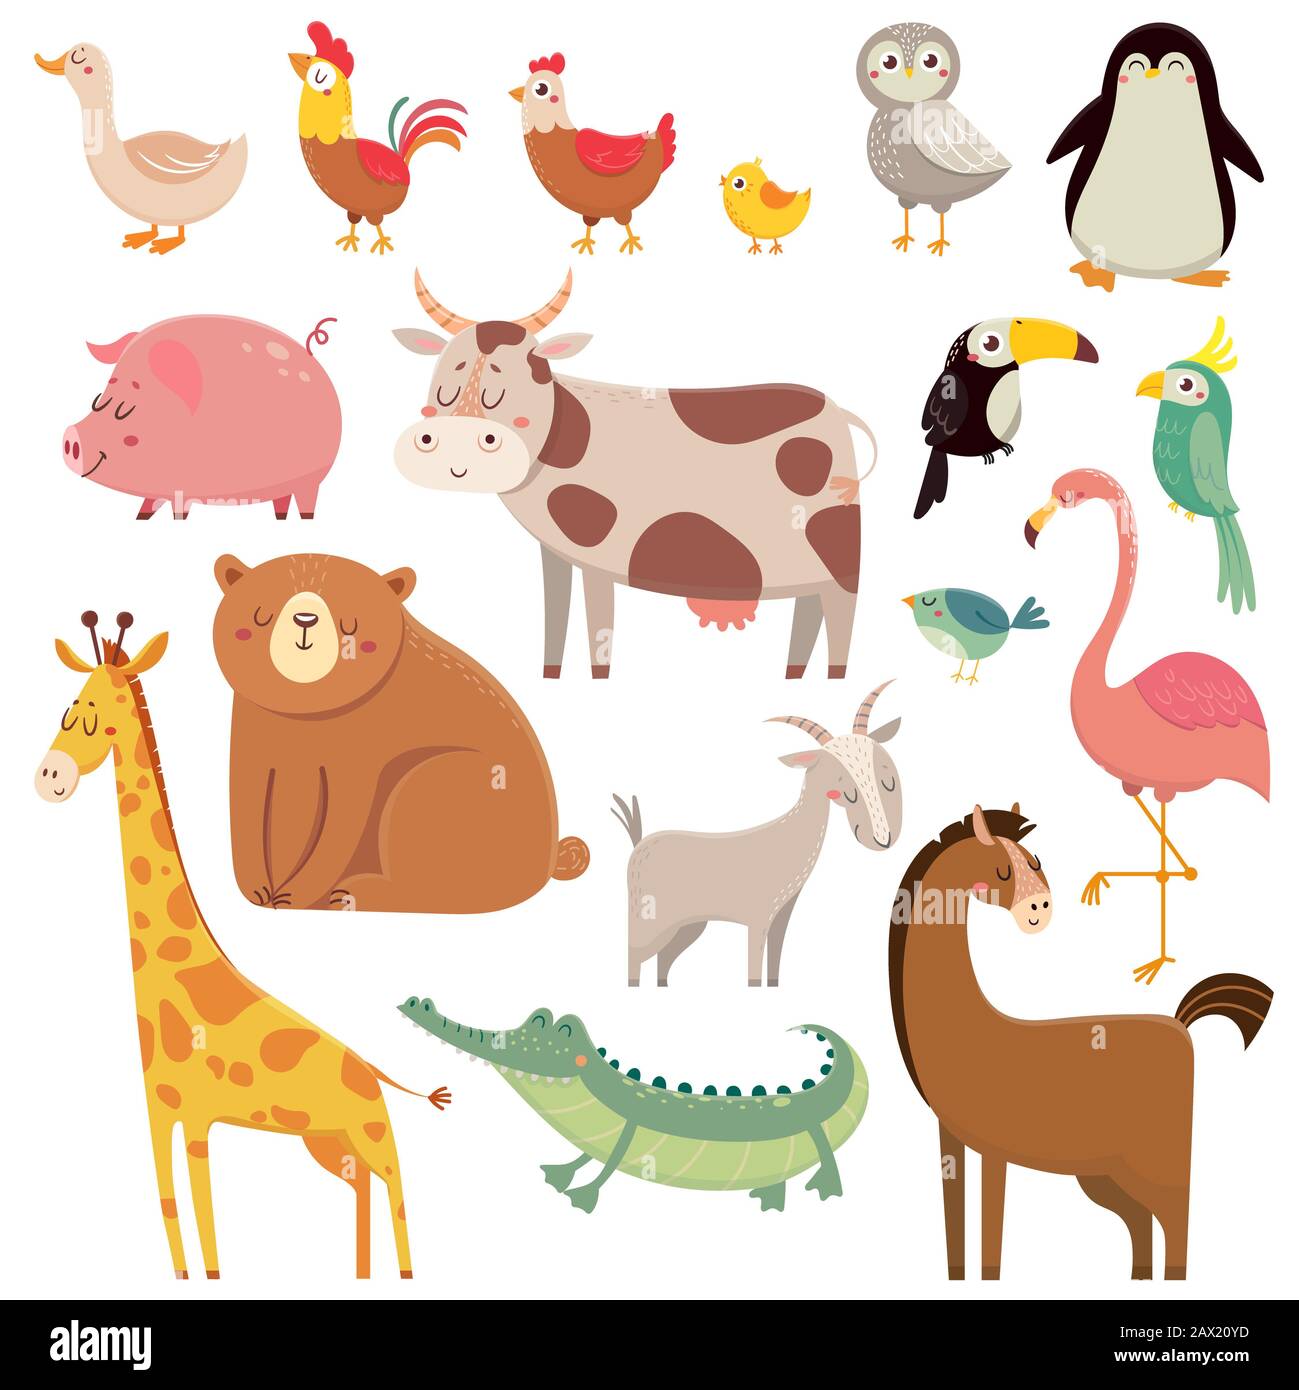 Baby cartoons wild bear, giraffe, crocodile, bird and domestic animals.  Cute cartoon animal kids vector illustration set Stock Photo - Alamy